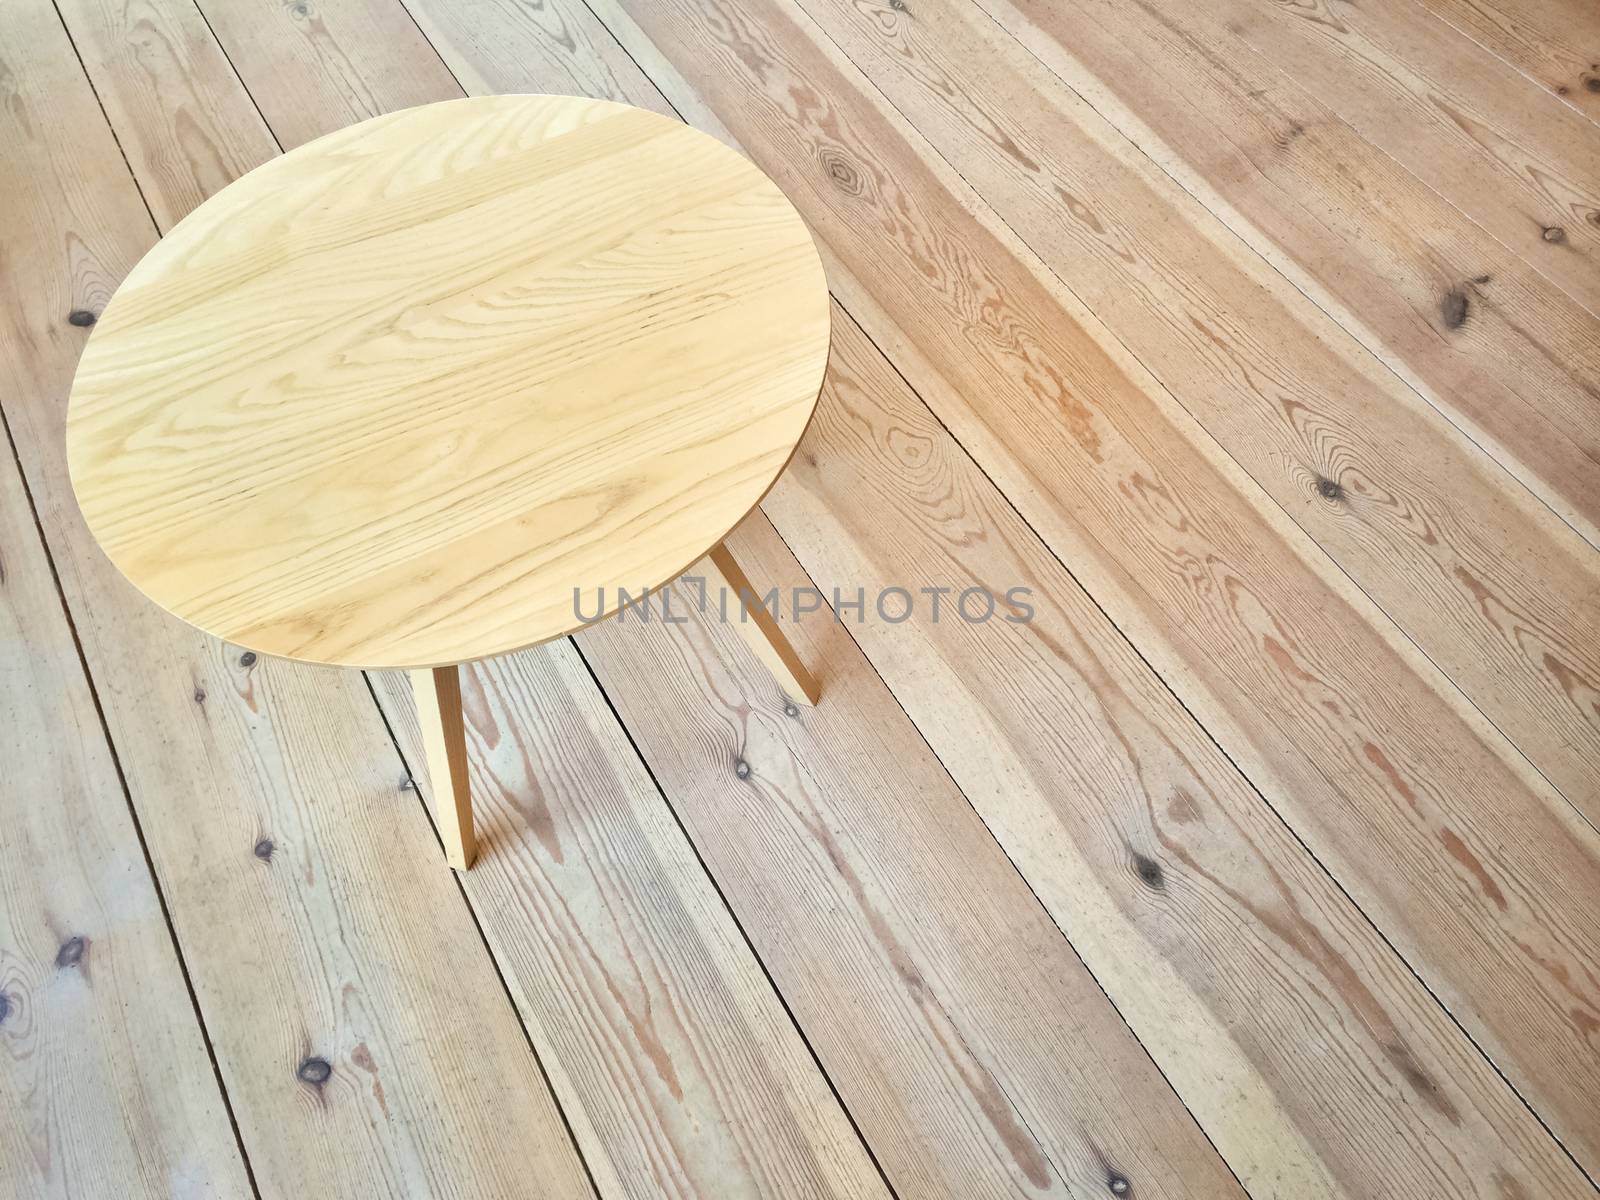 Simple round table on wooden floor by anikasalsera